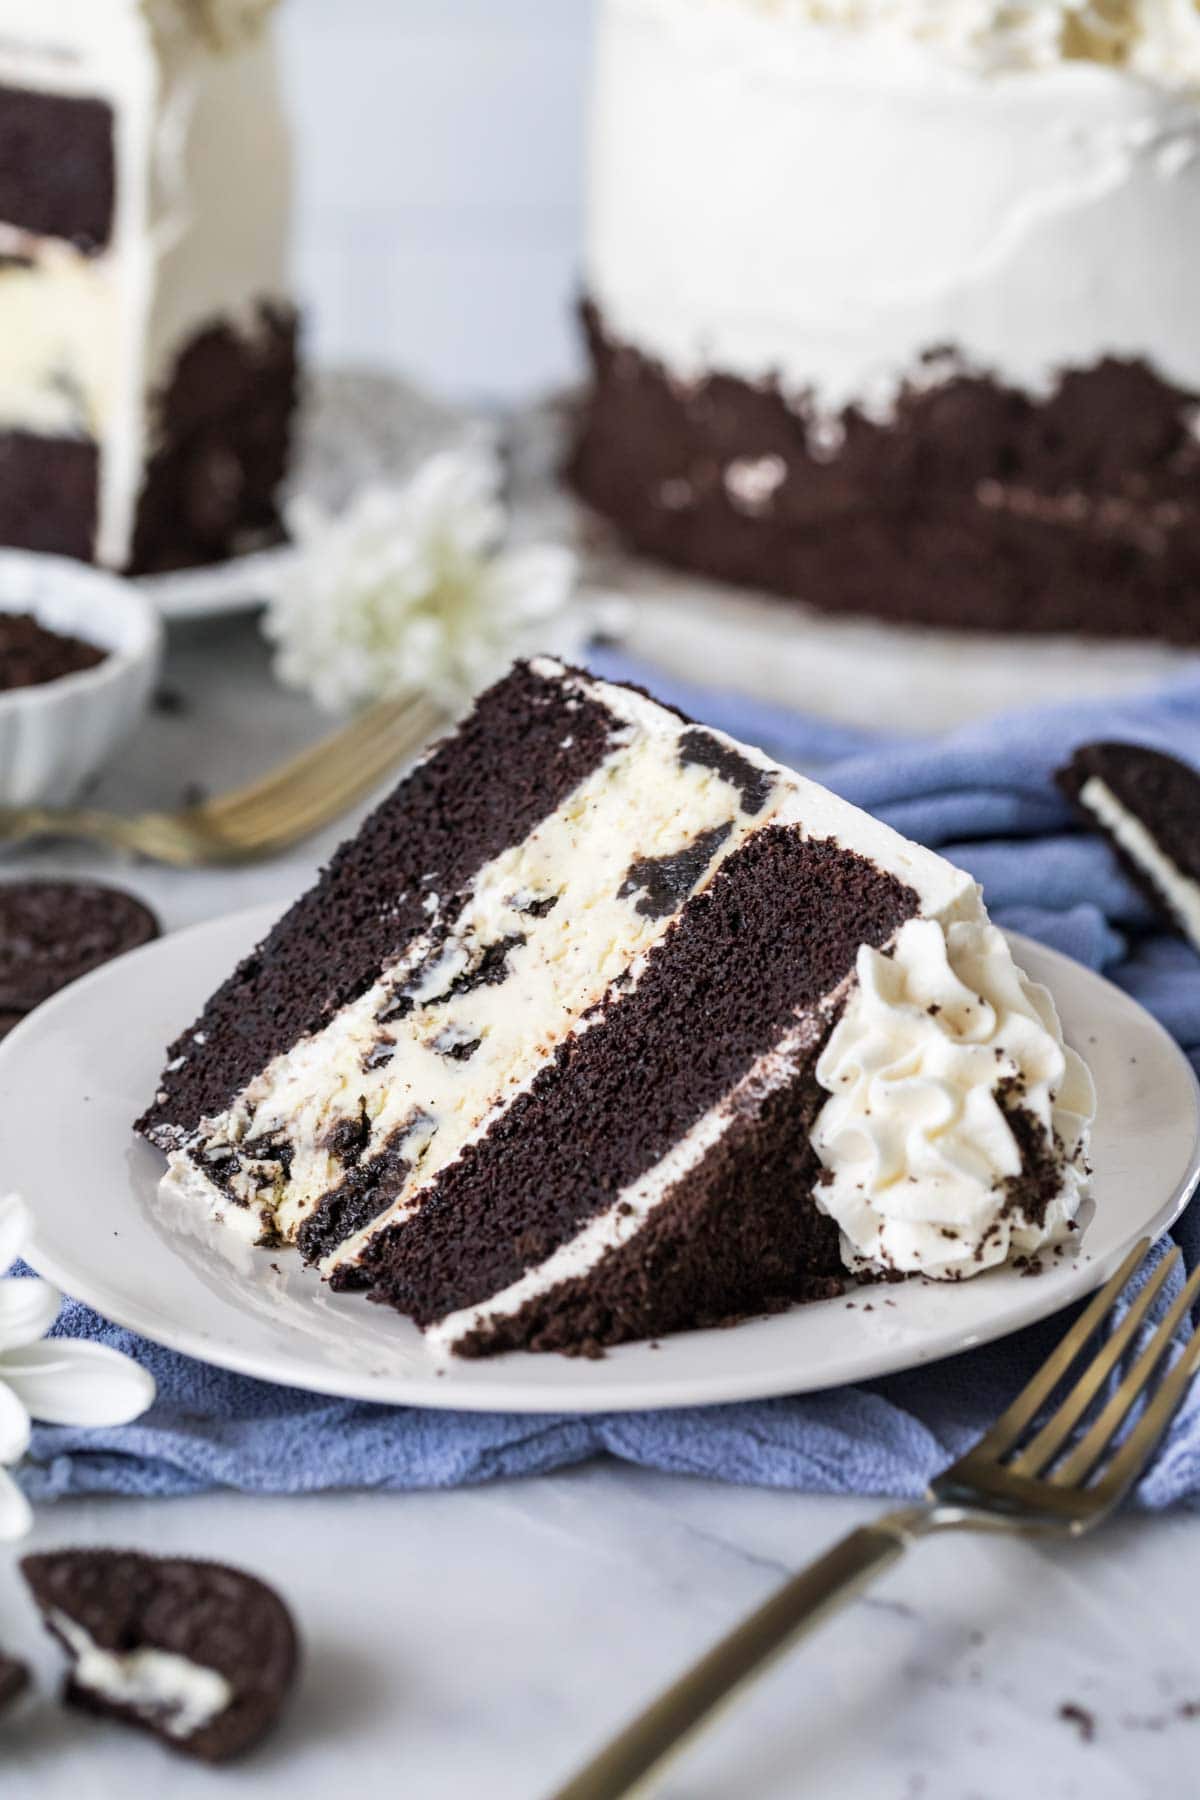 Slice of cake consisting of two layers of chocolate cake sandwiching an oreo cheesecake.